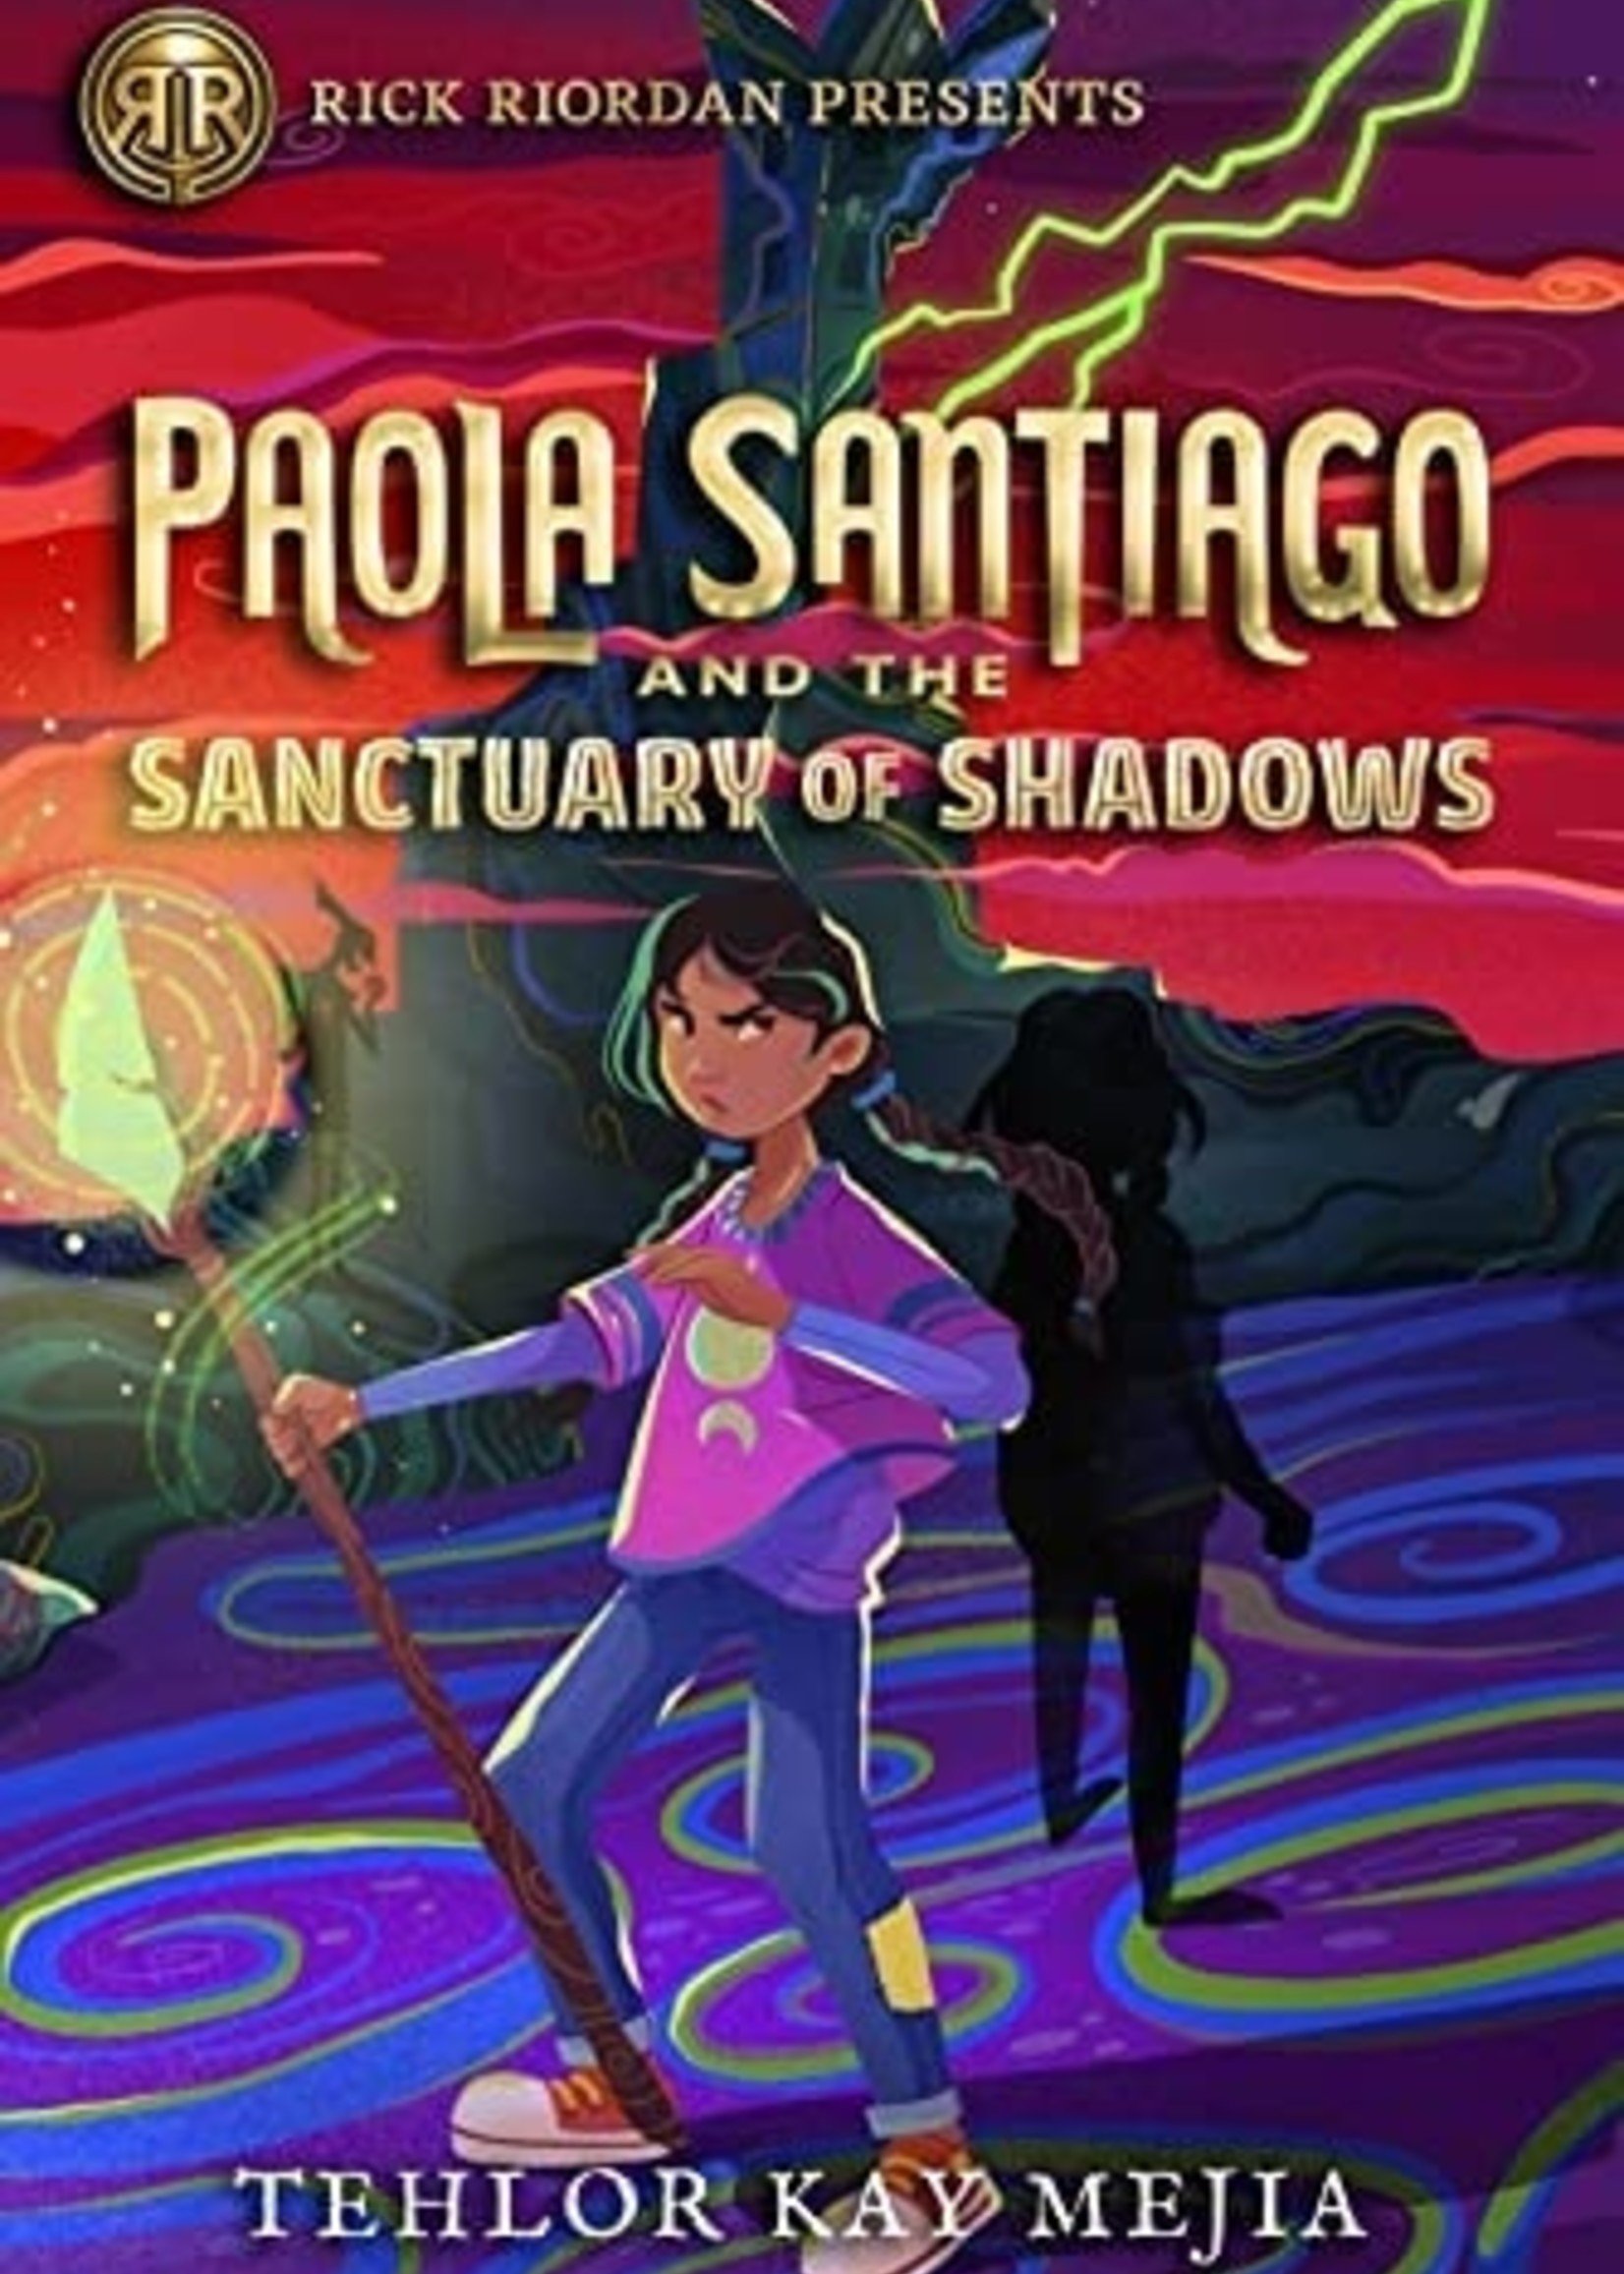 Rick Riordan Presents, Paola Santiago #03, Paola Santiago and the Sanctuary of Shadows - Hardcover